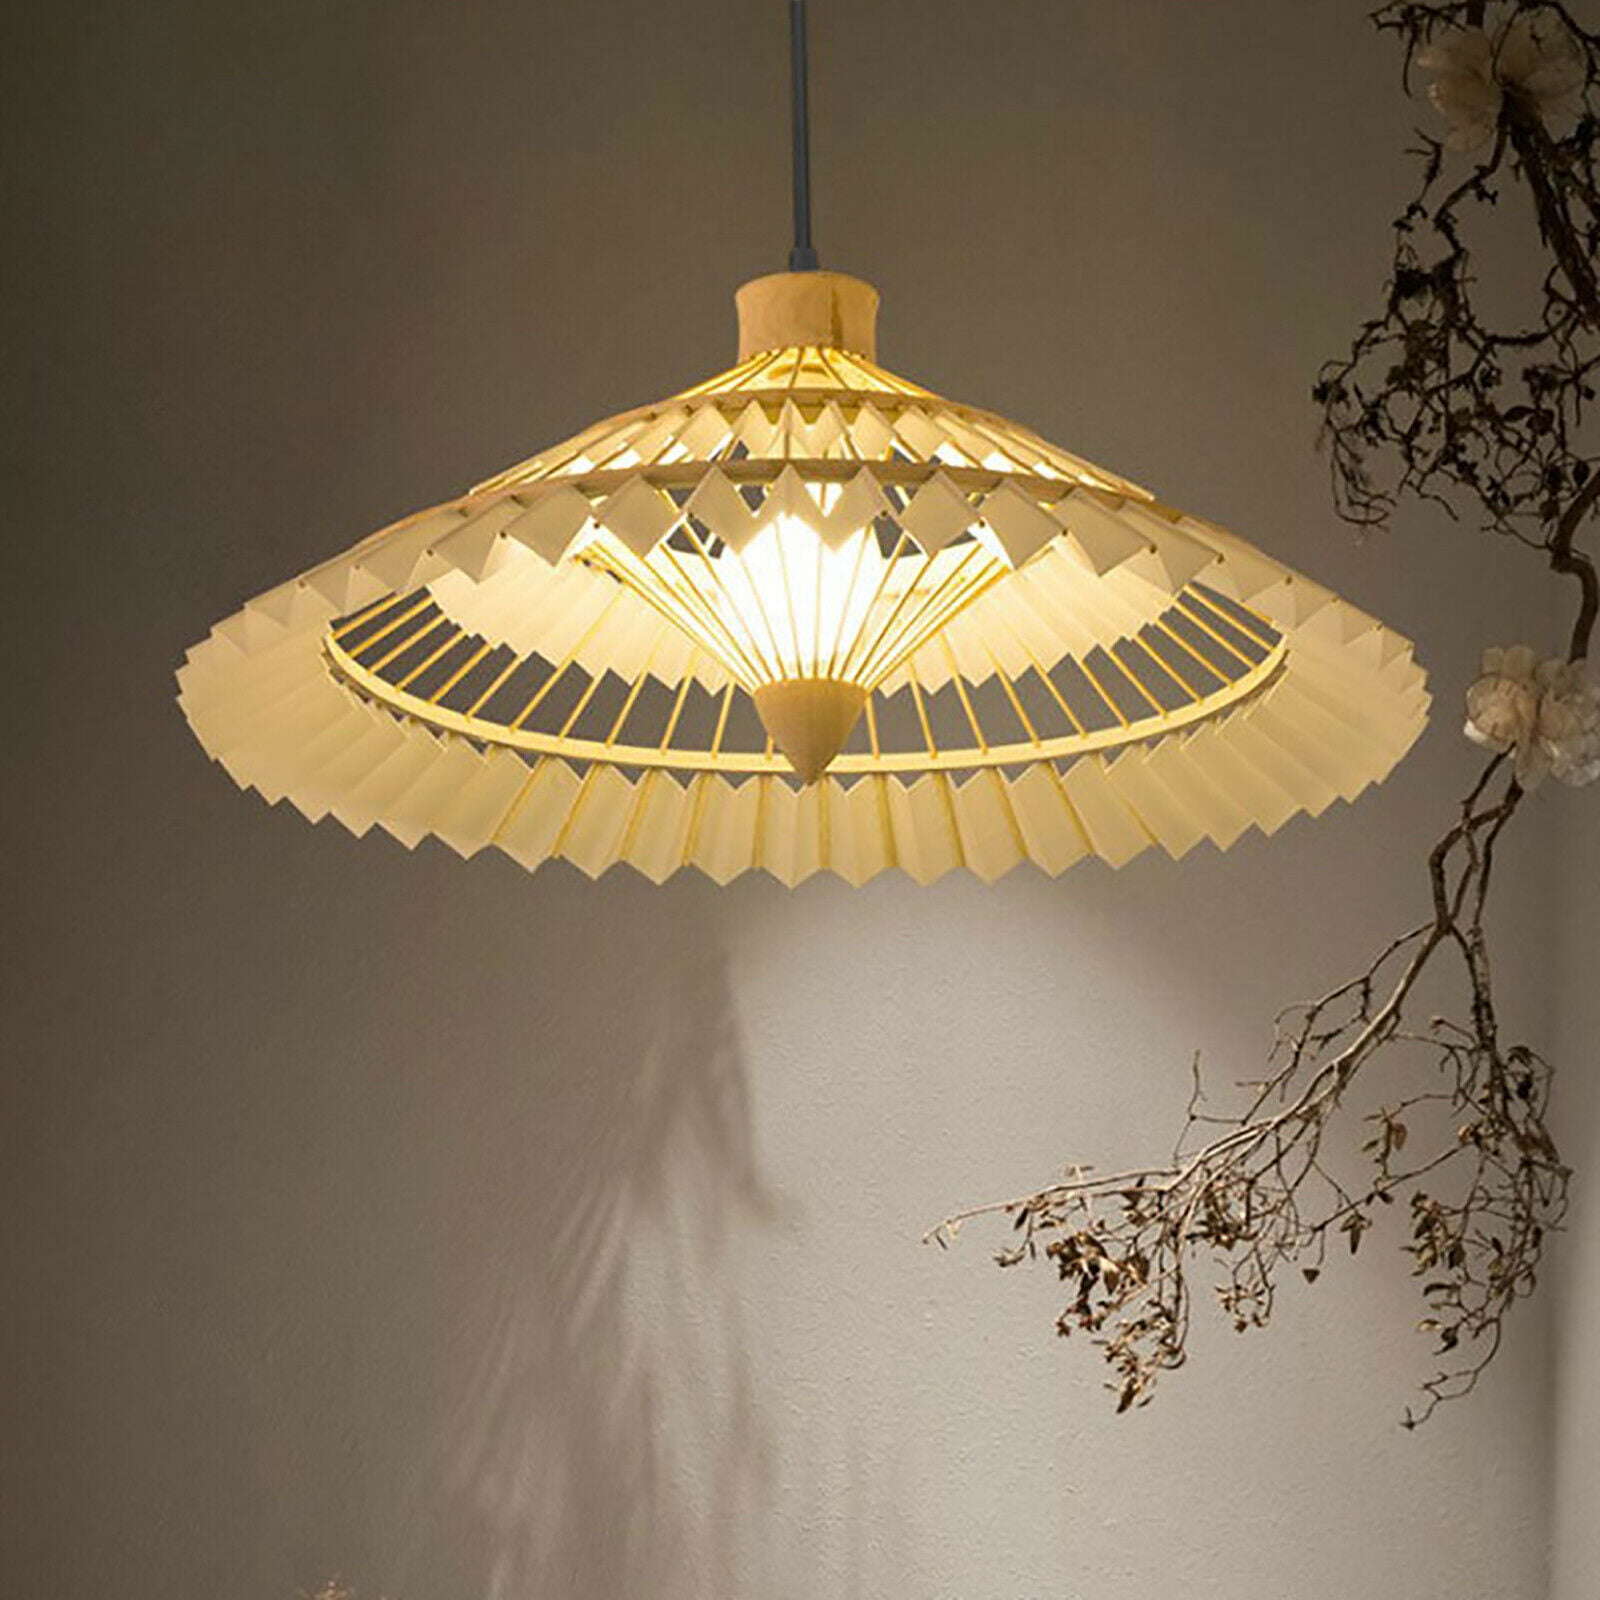 Bamboo Wicker Rattan Lantern Shade Ceiling Light Fixture Asian Art Pendant Lamp 